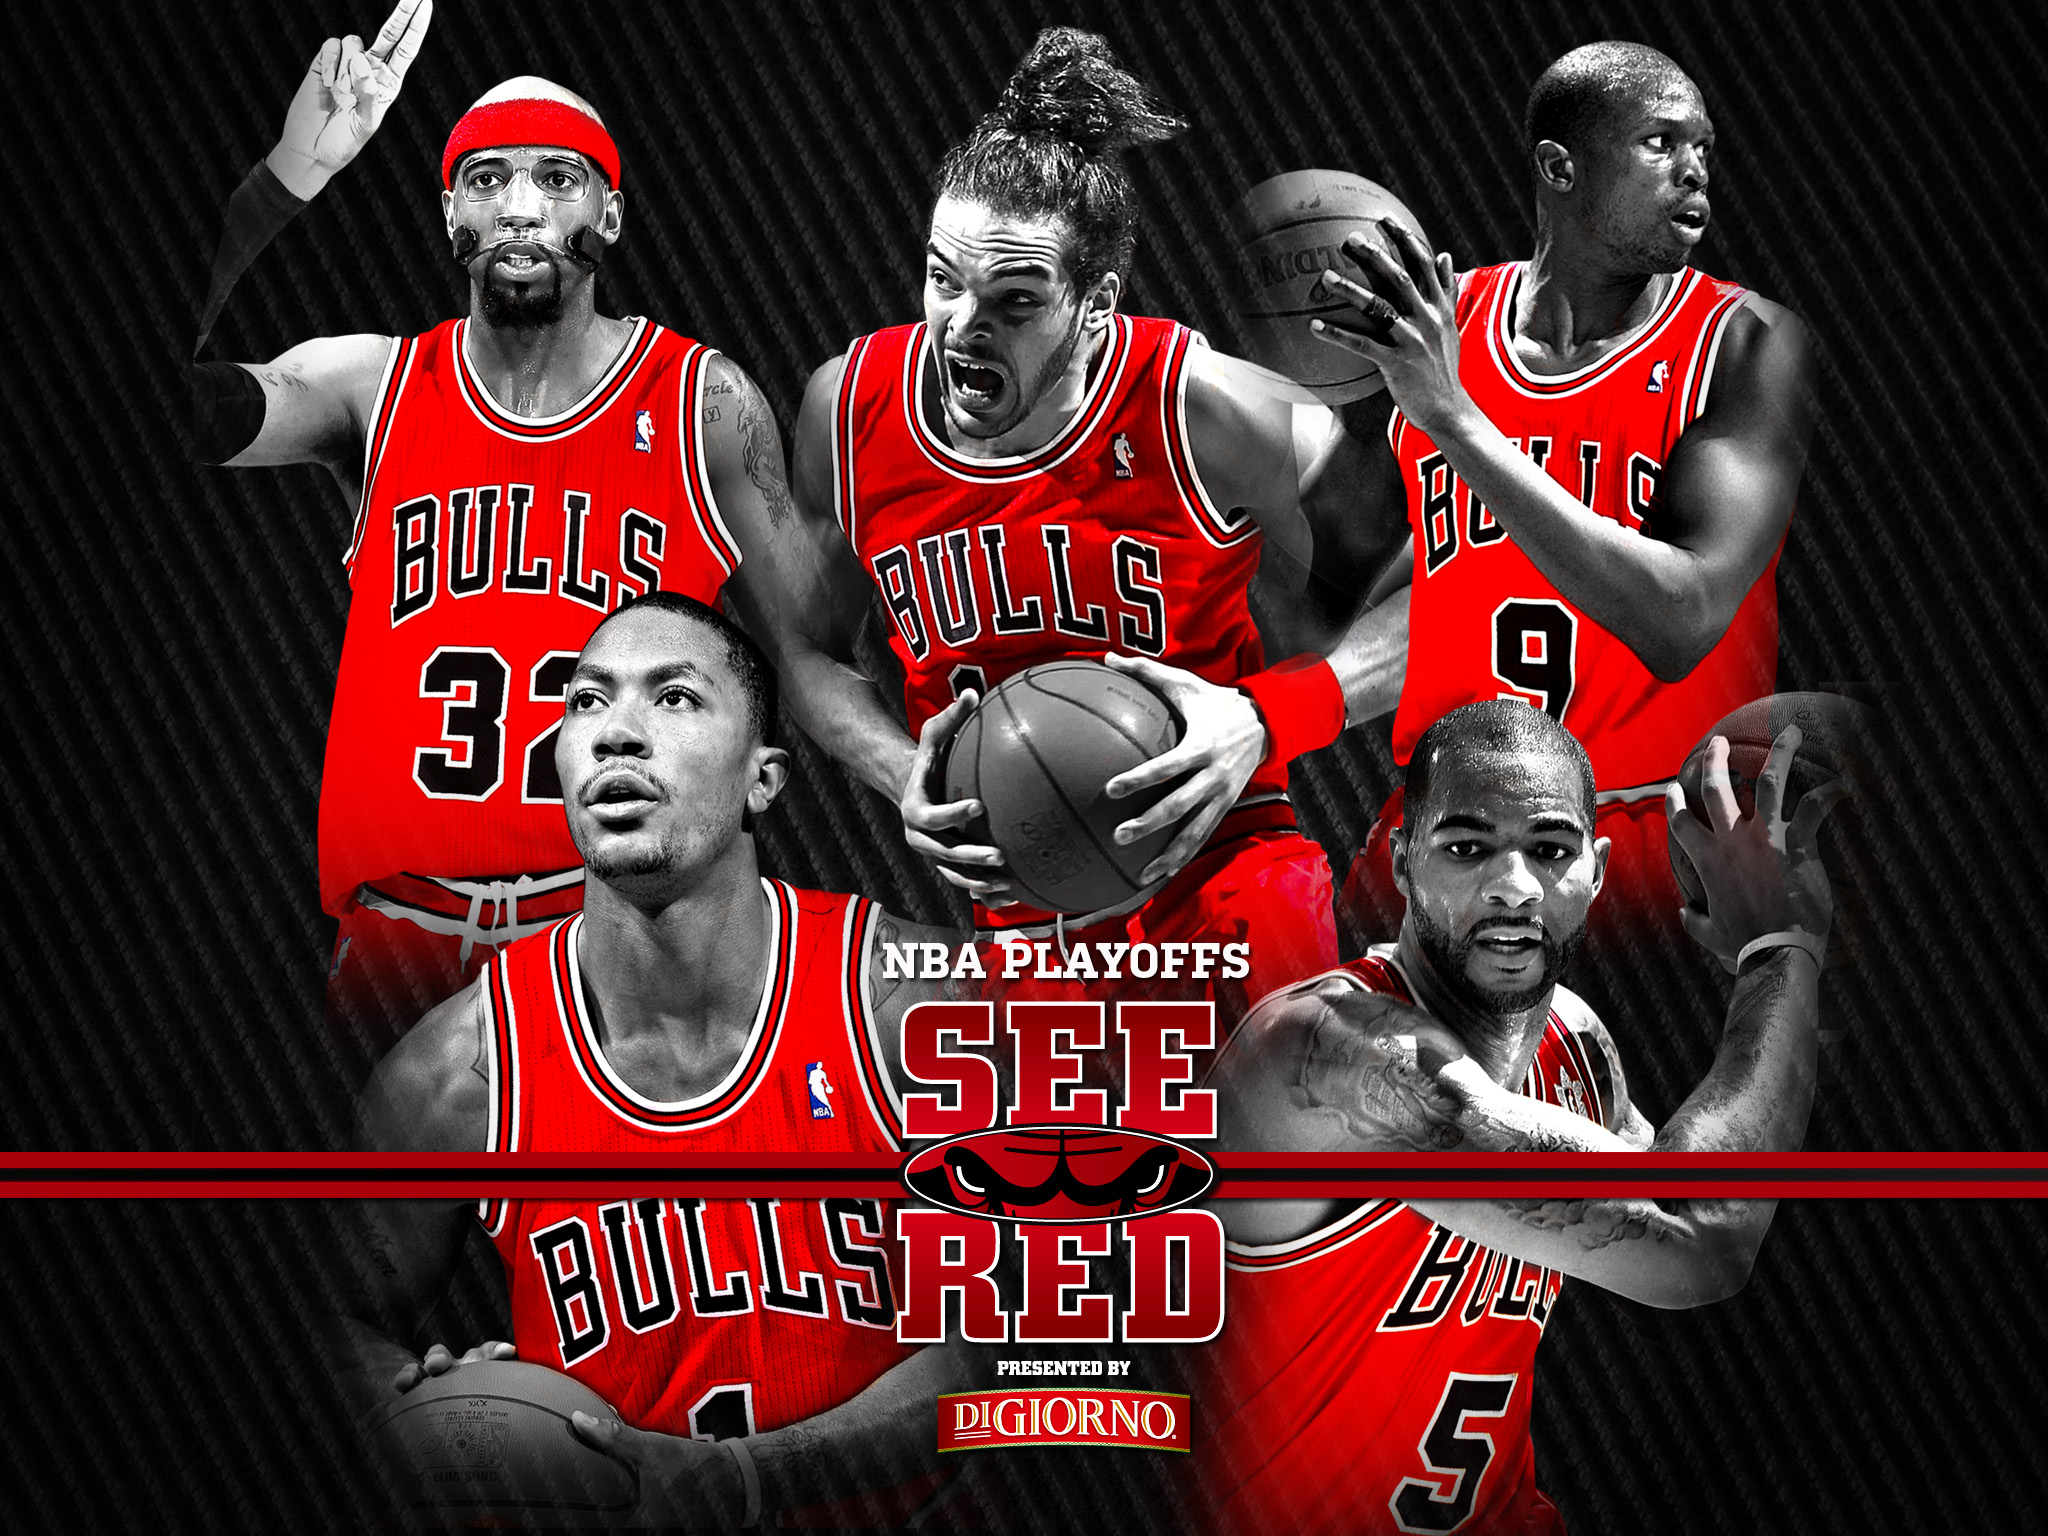 Playoffs See Red Wallpaper Chicago Bulls